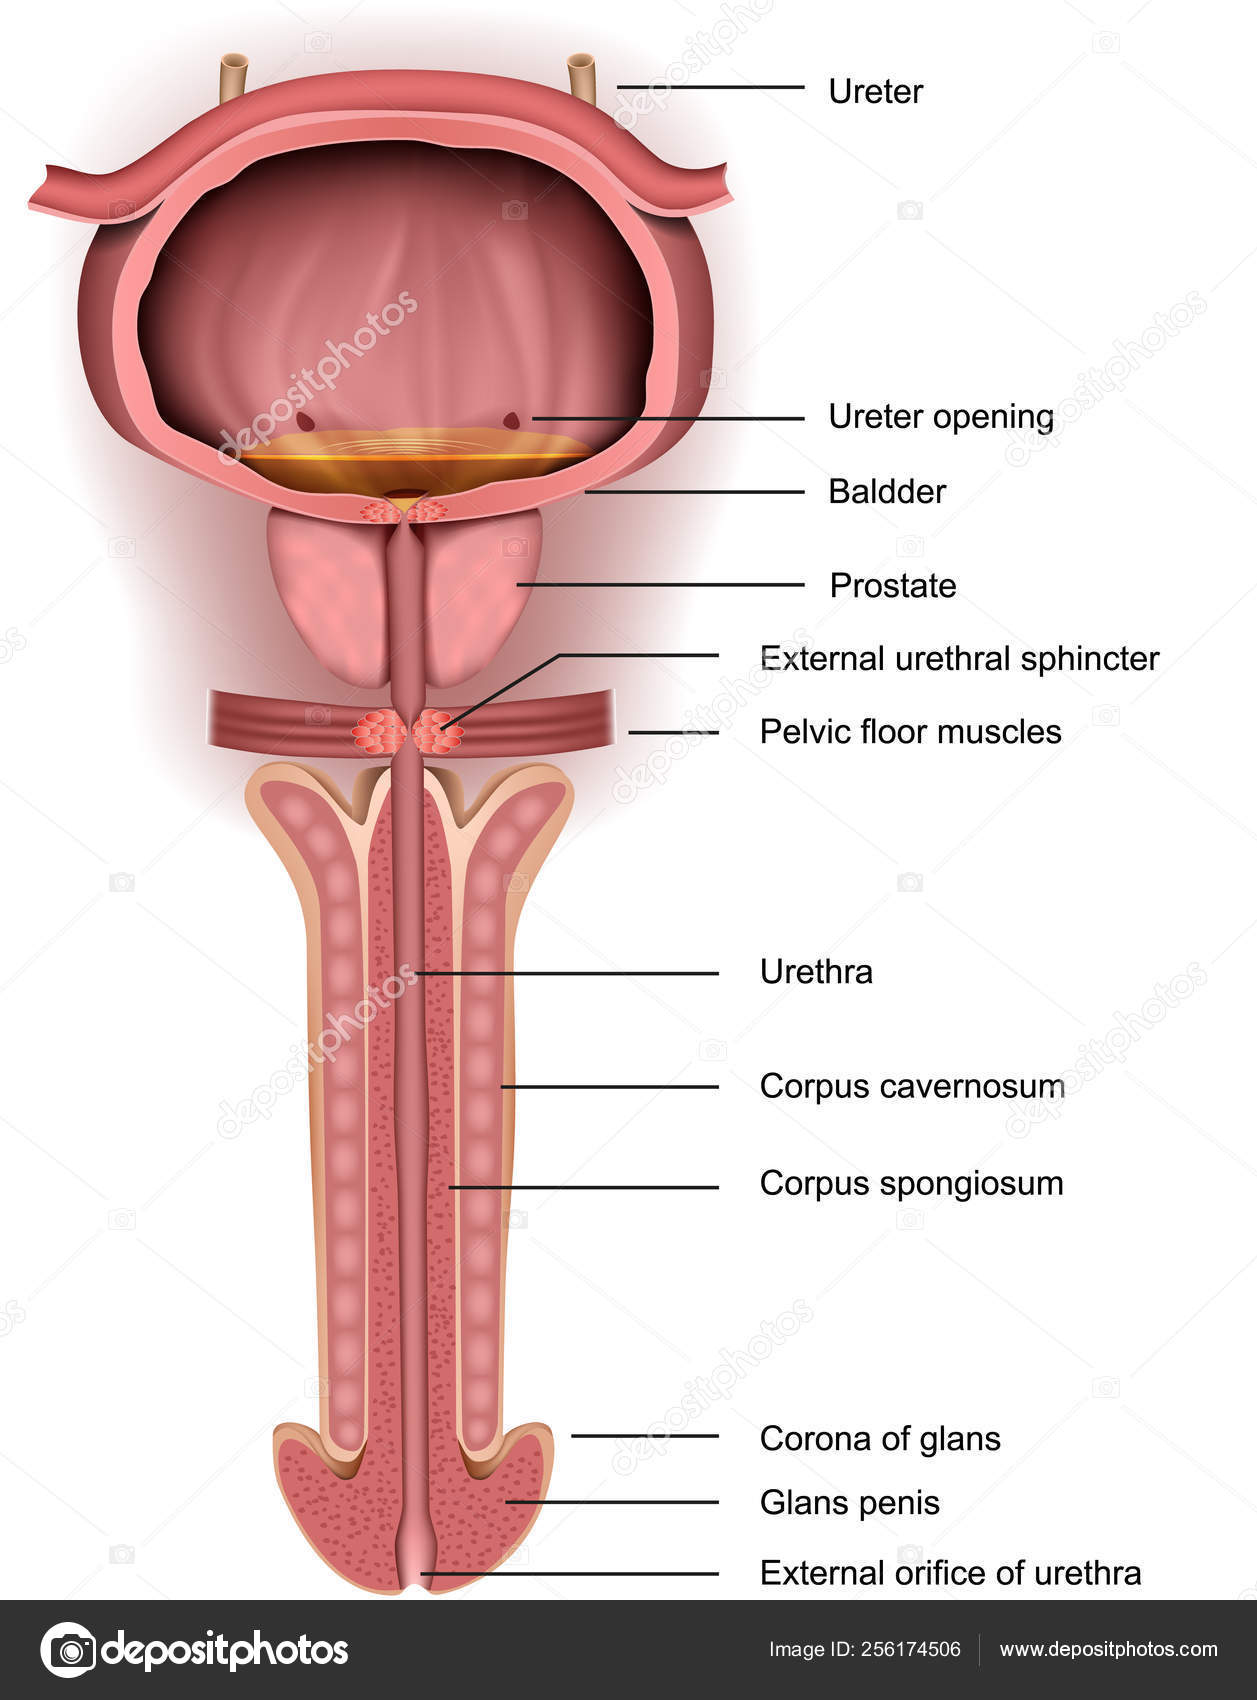 Adenomul de prostata – evolutie, diagnostic, tratament | alsceva.ro